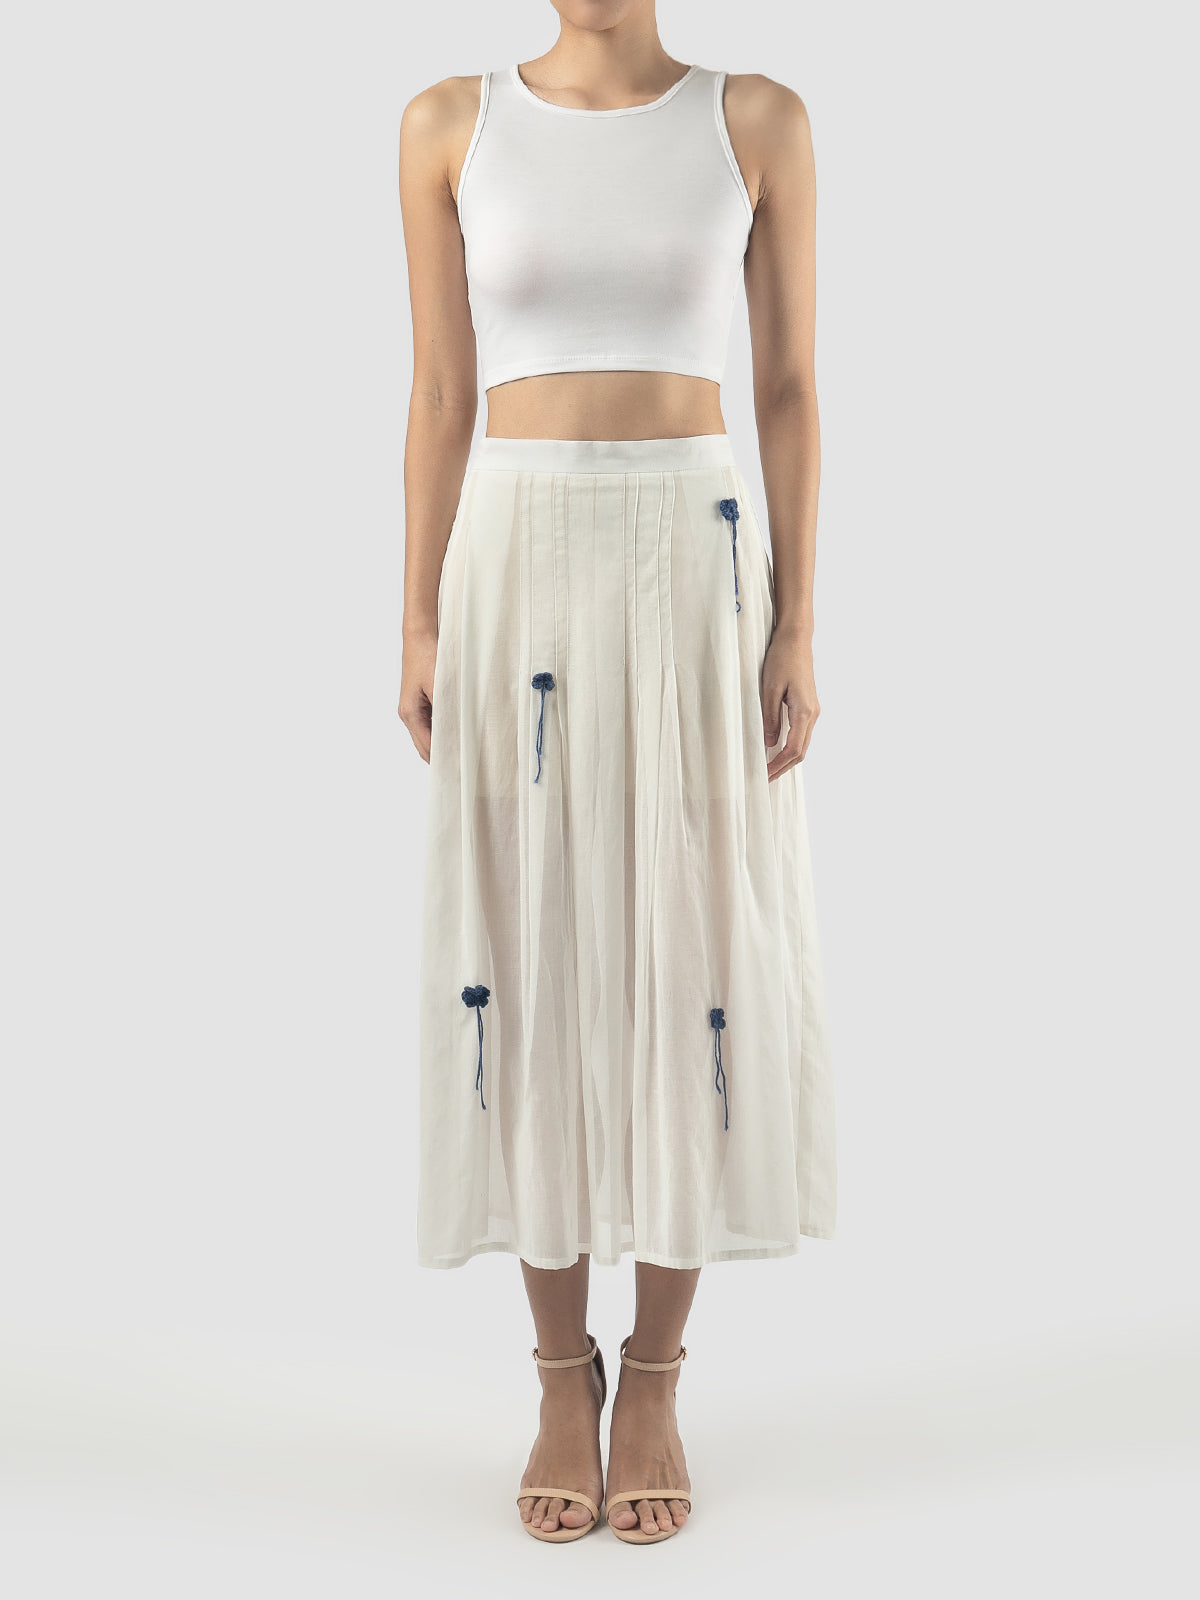 White pleated midi skirt